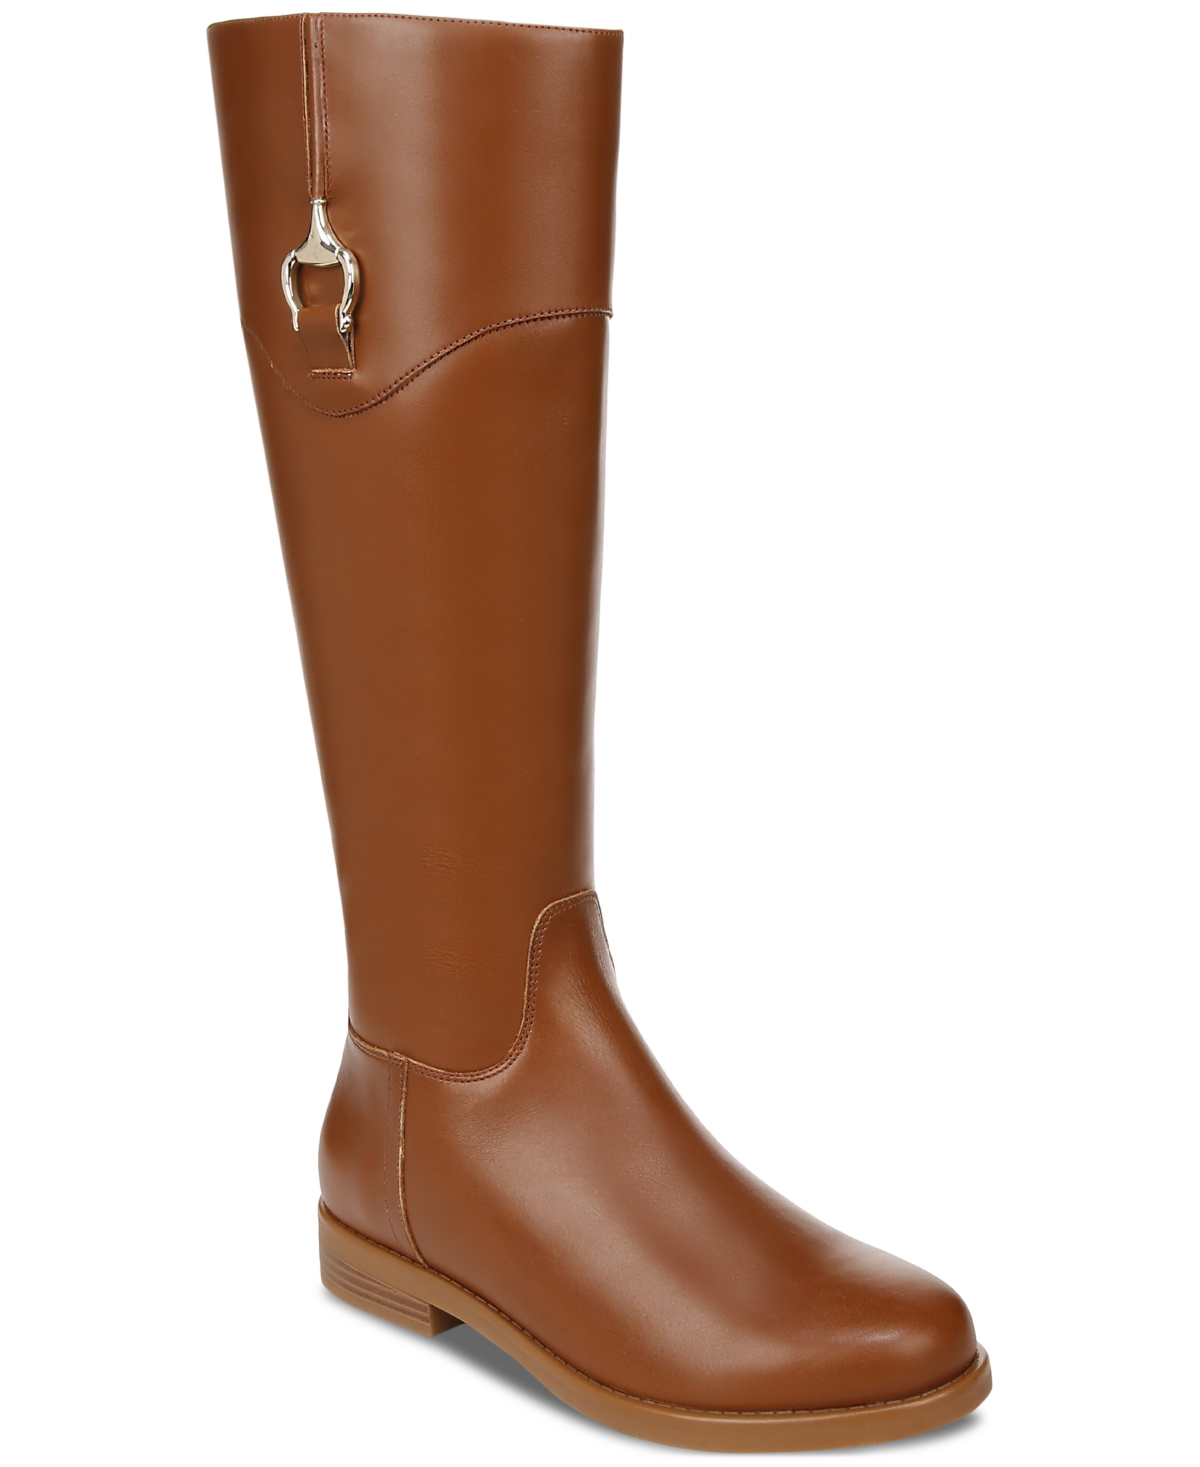 Sandraa Buckled Riding Boots, Created for Macy's - Cinnamon